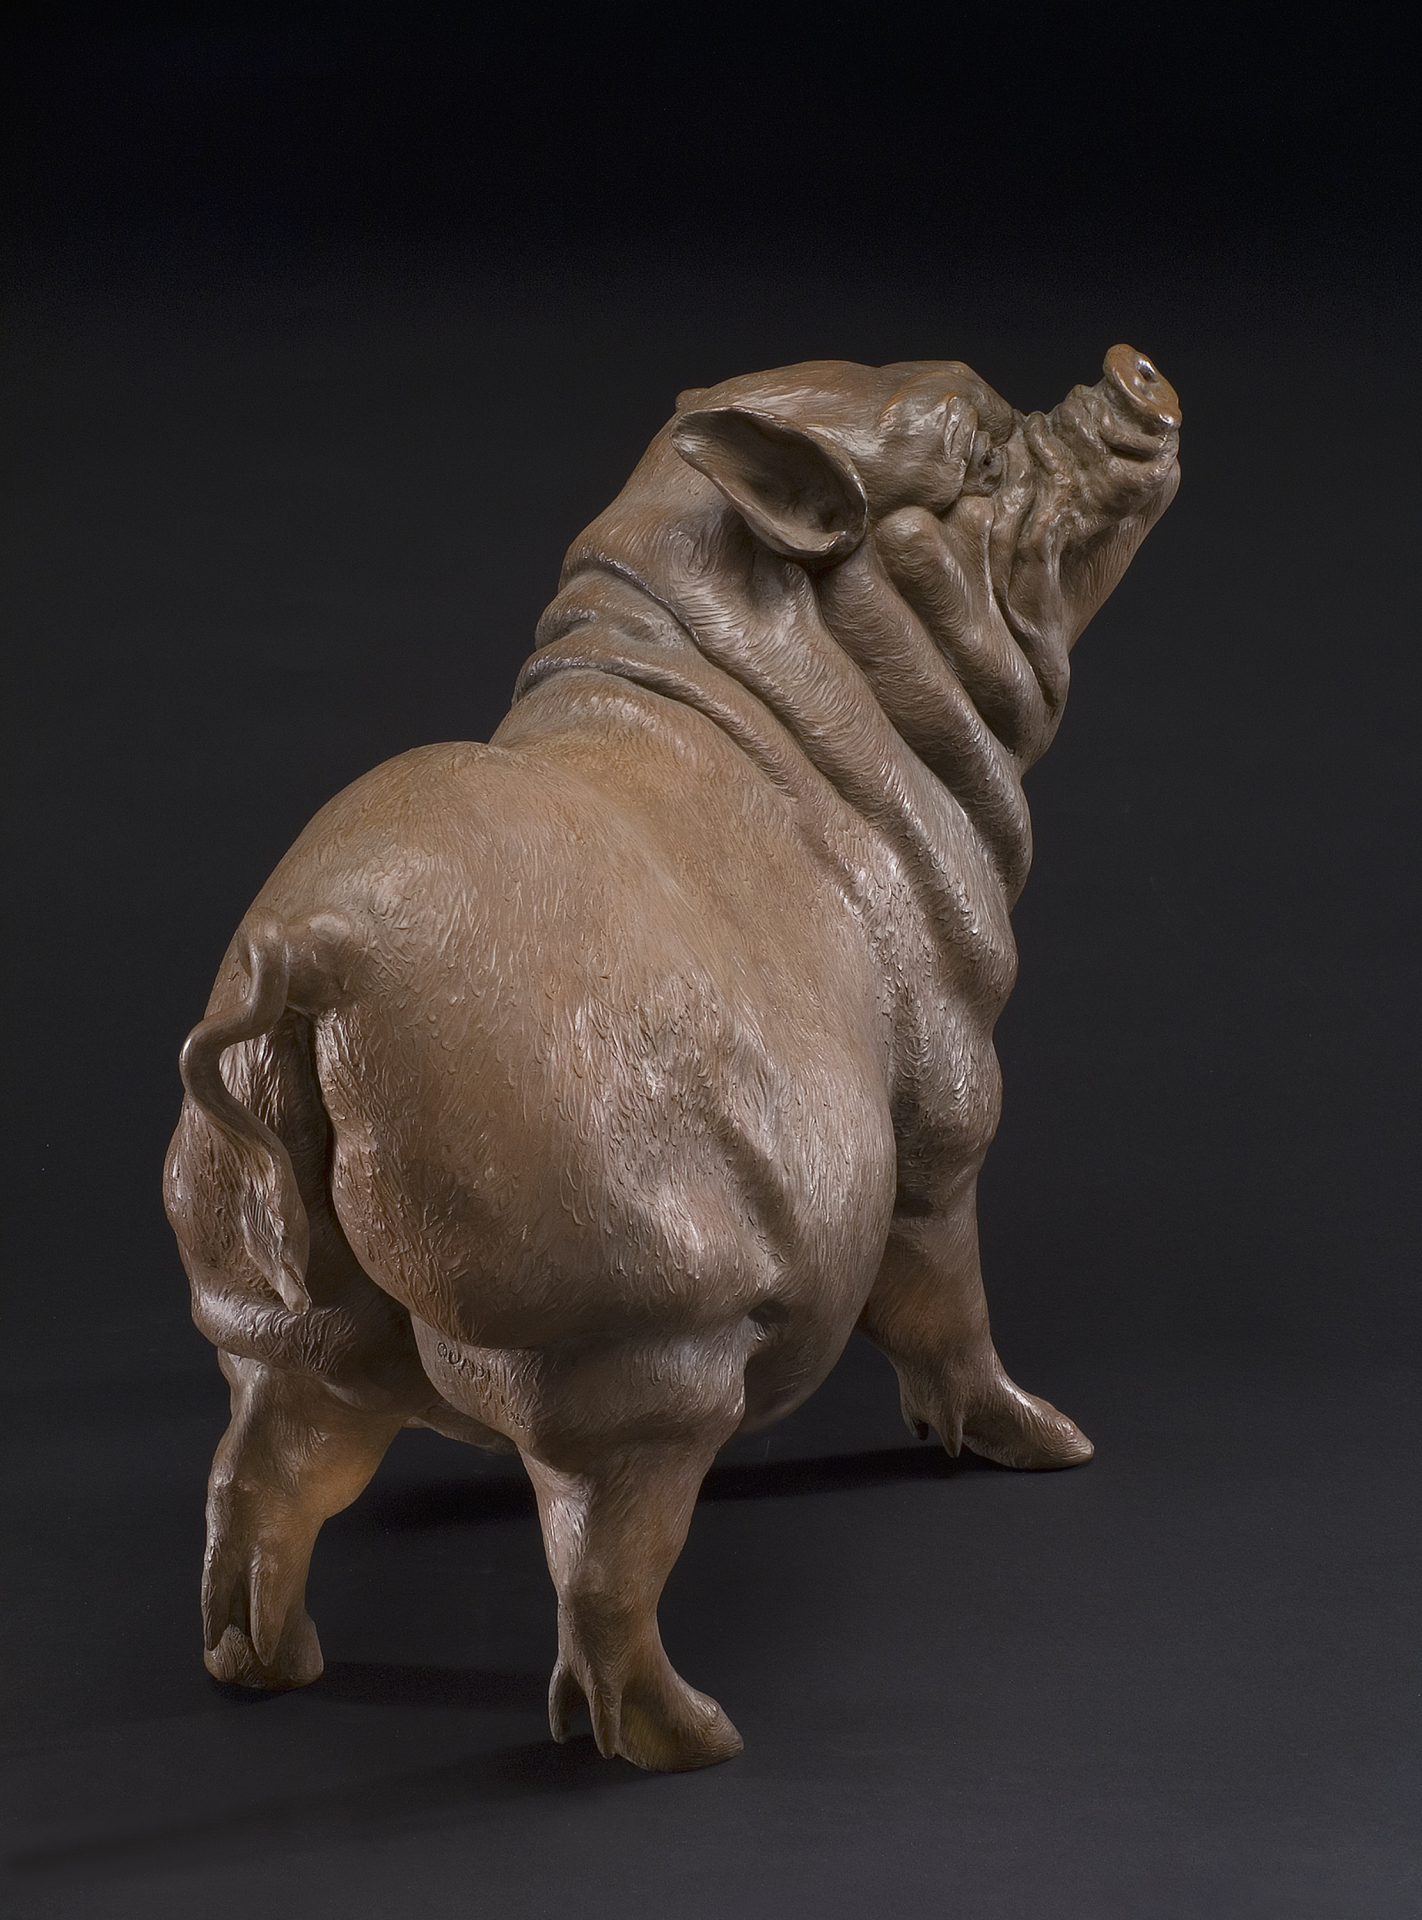 Bronze sculpture of Petal the pig